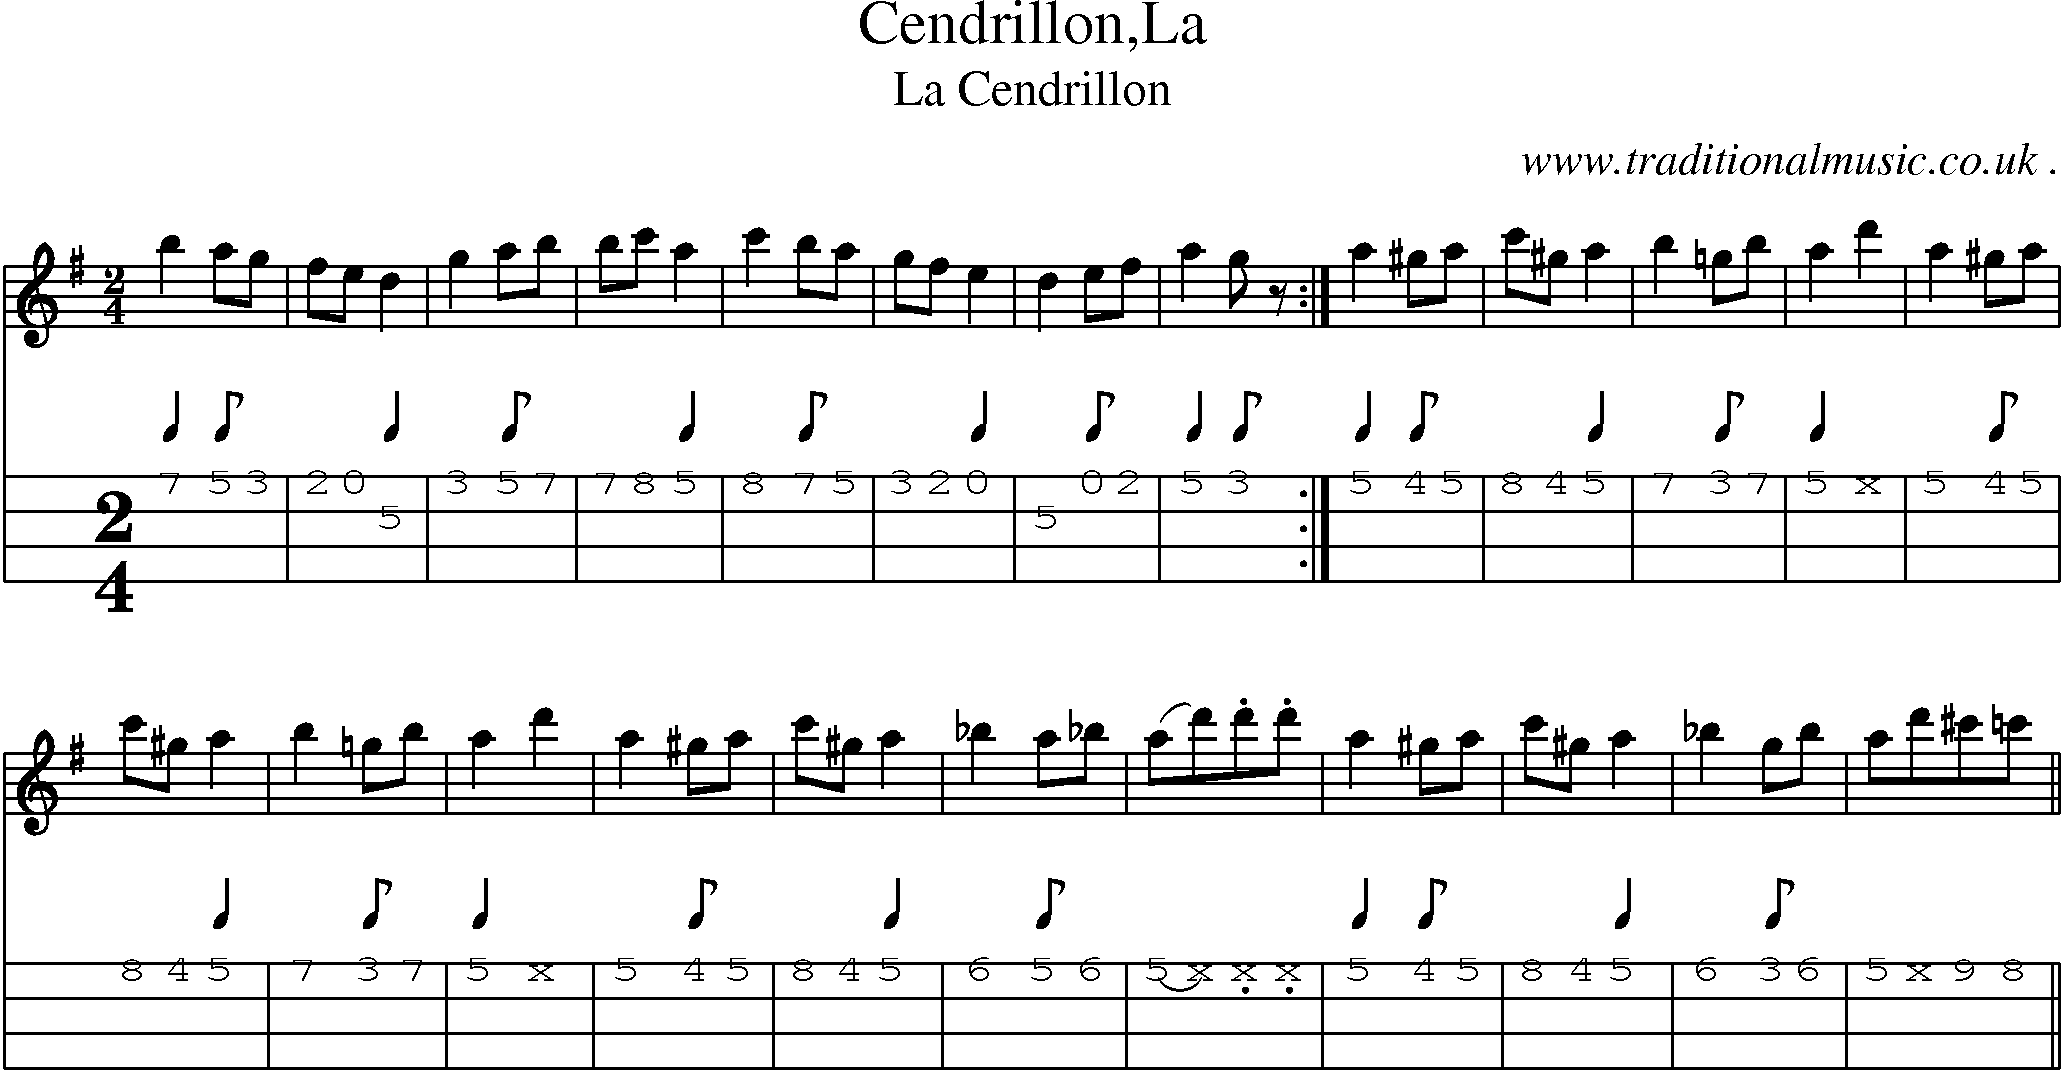 Sheet-Music and Mandolin Tabs for Cendrillonla